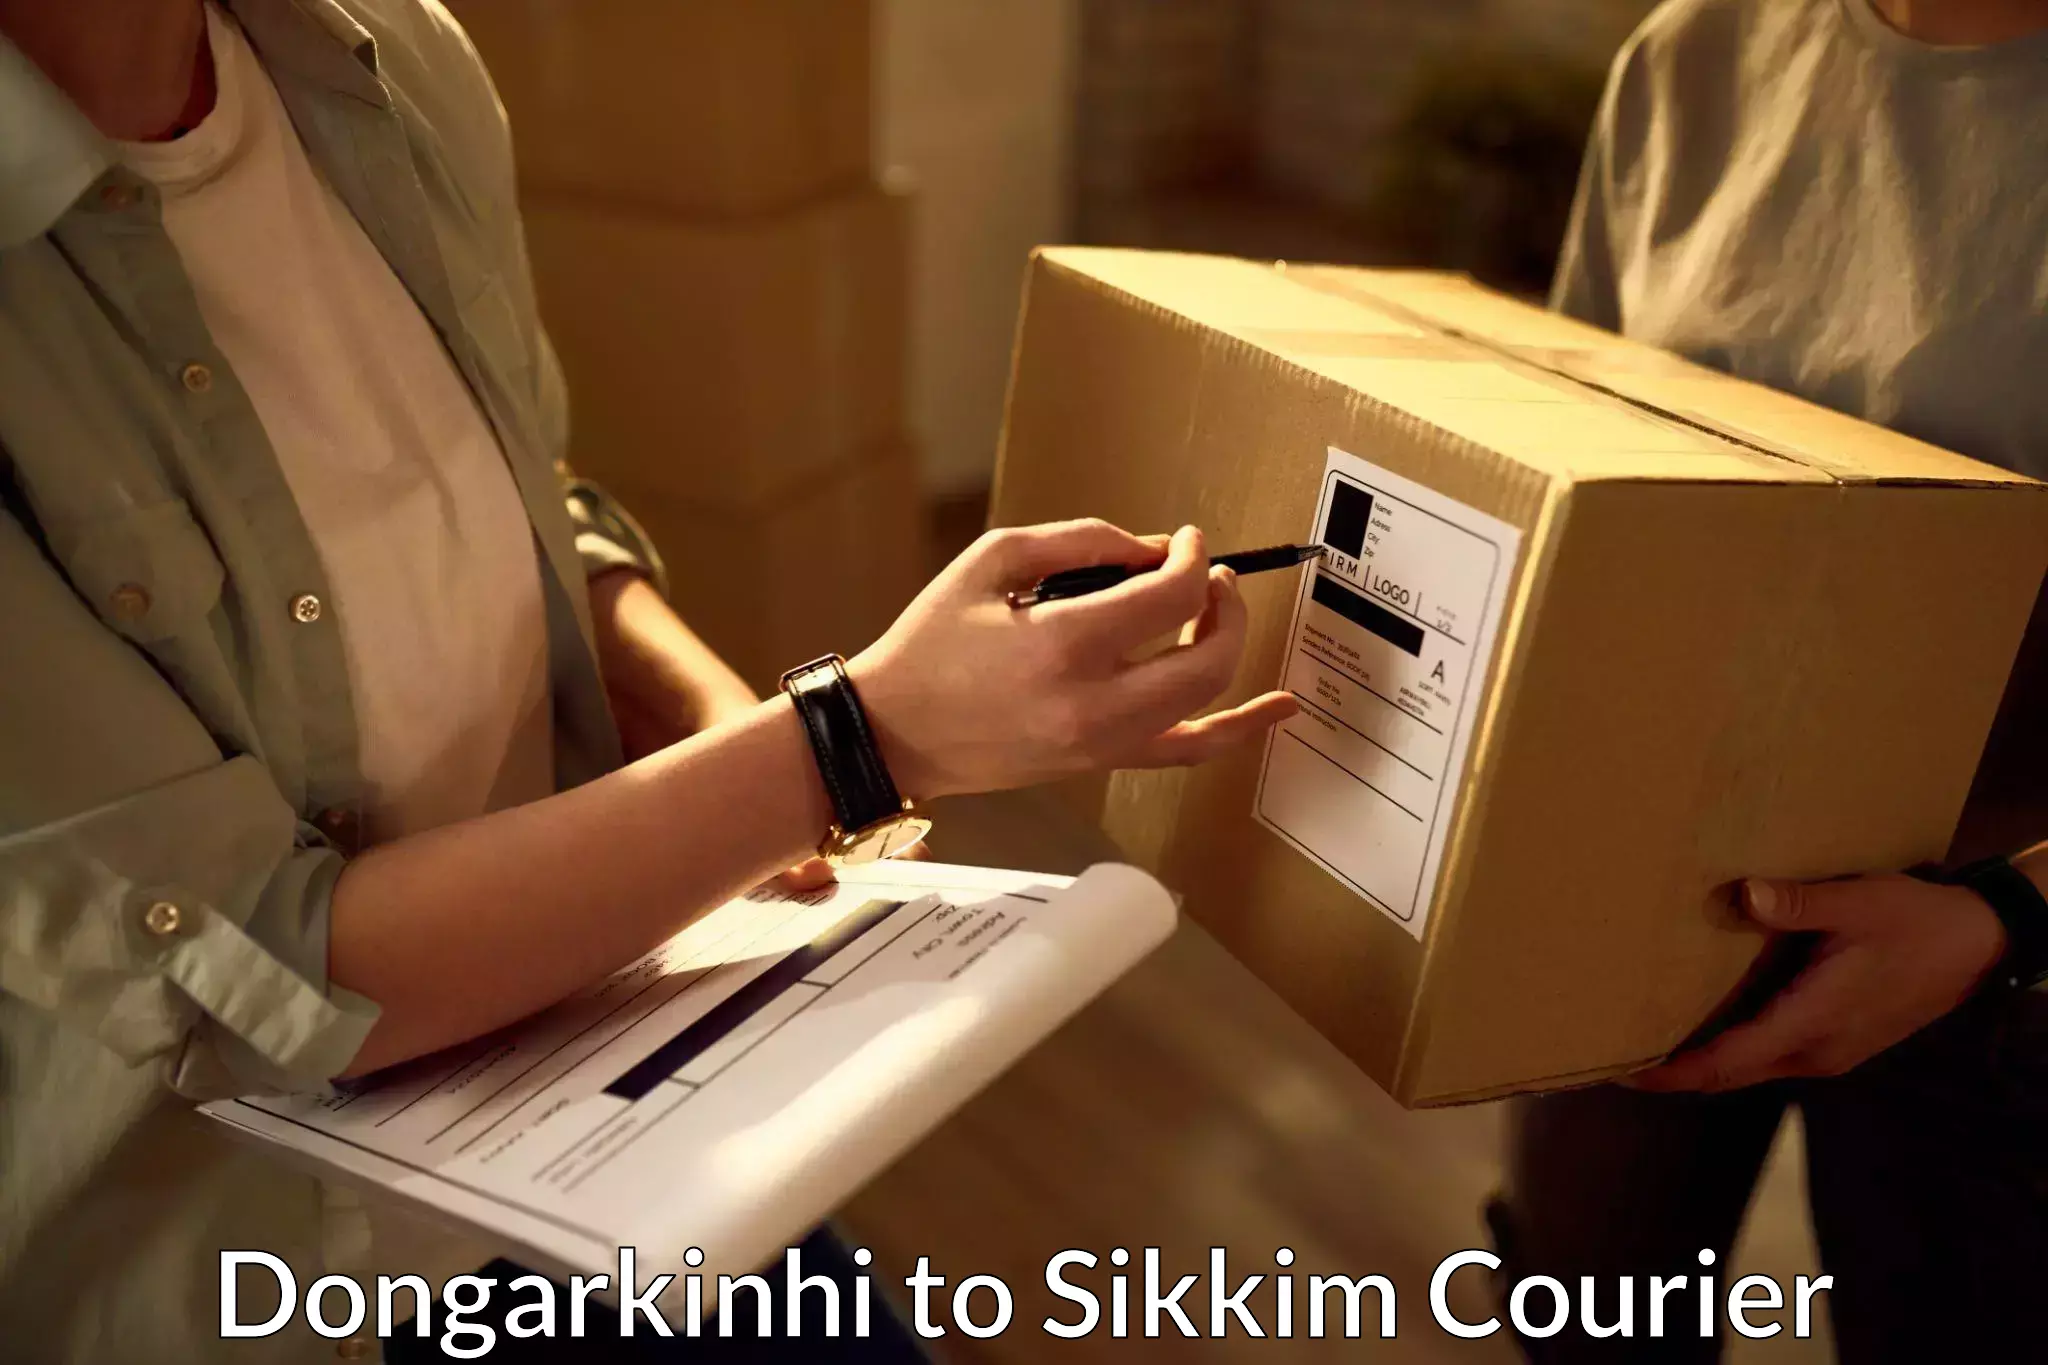 Reliable logistics providers Dongarkinhi to Mangan